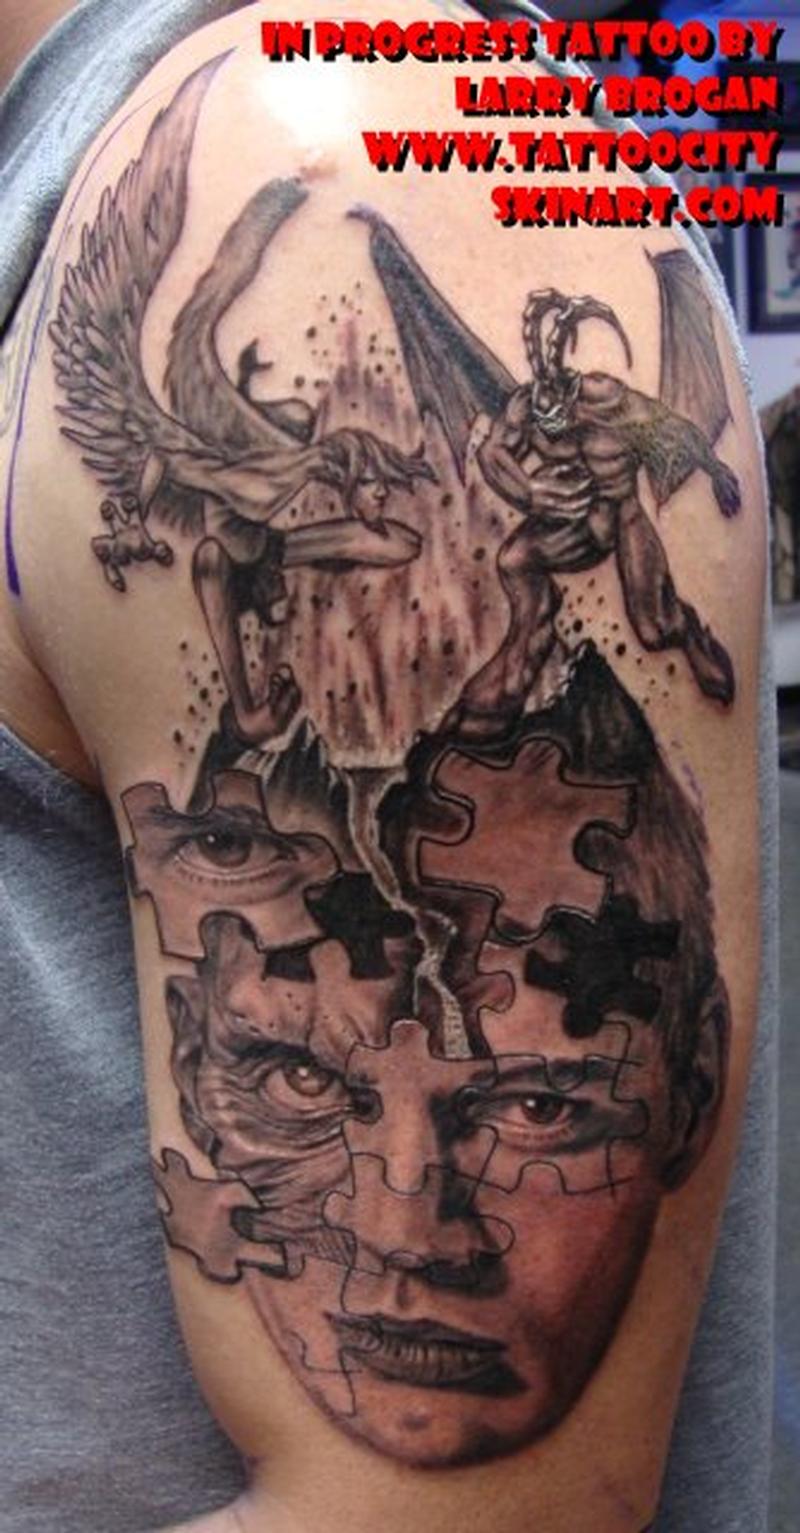 Puzzle Face Angel Vs Demon Half Sleeve Tattoo In Progress By Larry Brogan